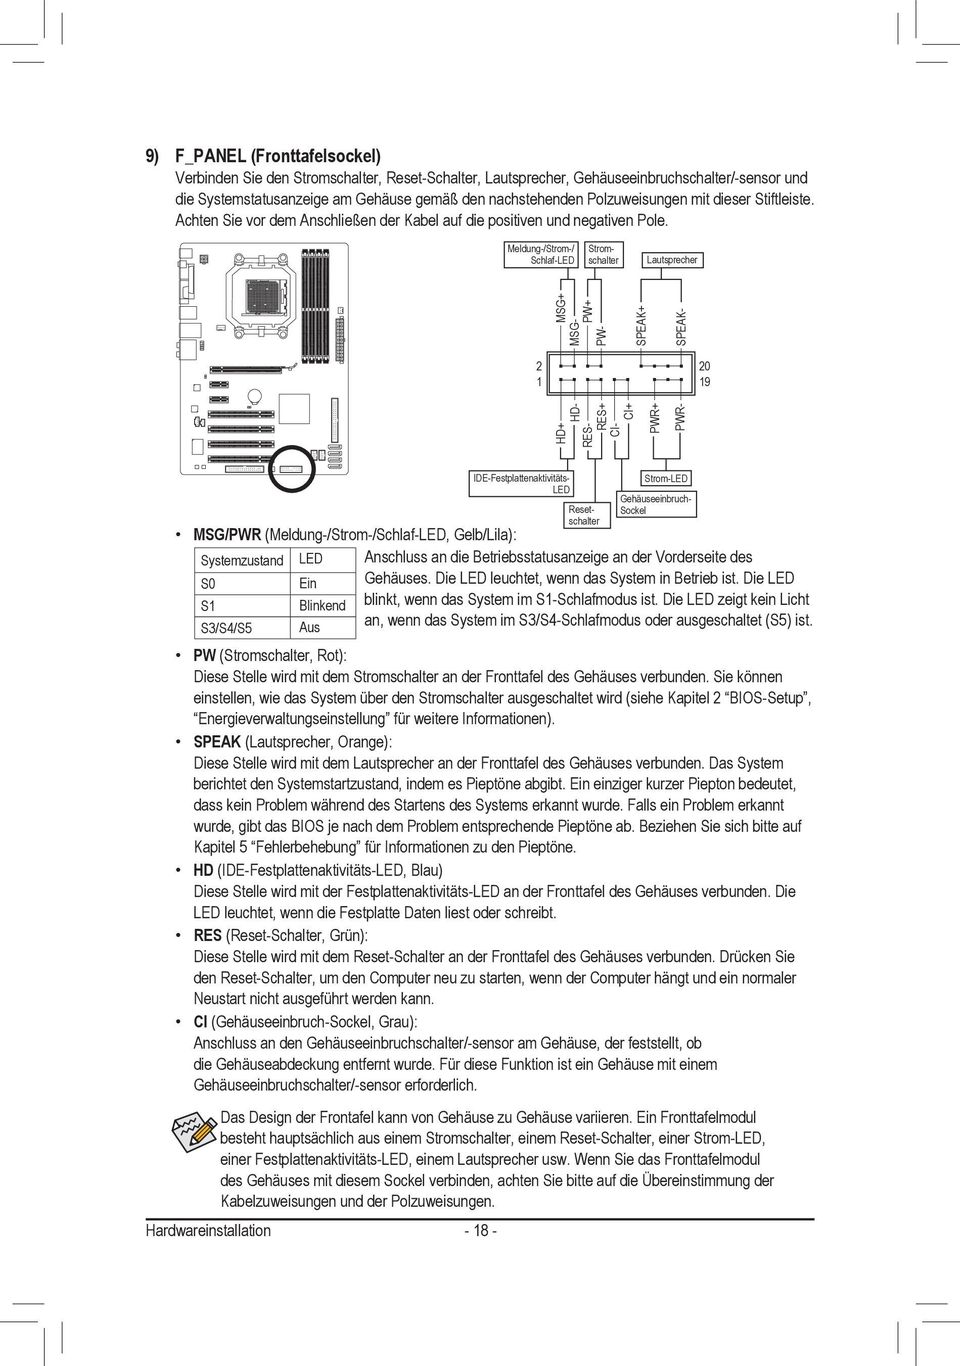 Meldung-/Strom-/ Schlaf-LED Stromschalter Lautsprecher 2 20 9 PWR+ MSG+ PW+ SPEAK+ HD+ HD- RES- RES+ CI- CI+ PWR- MSG- PW- SPEAK- MSG/PWR (Meldung-/Strom-/Schlaf-LED, Gelb/Lila): Systemzustand S0 S